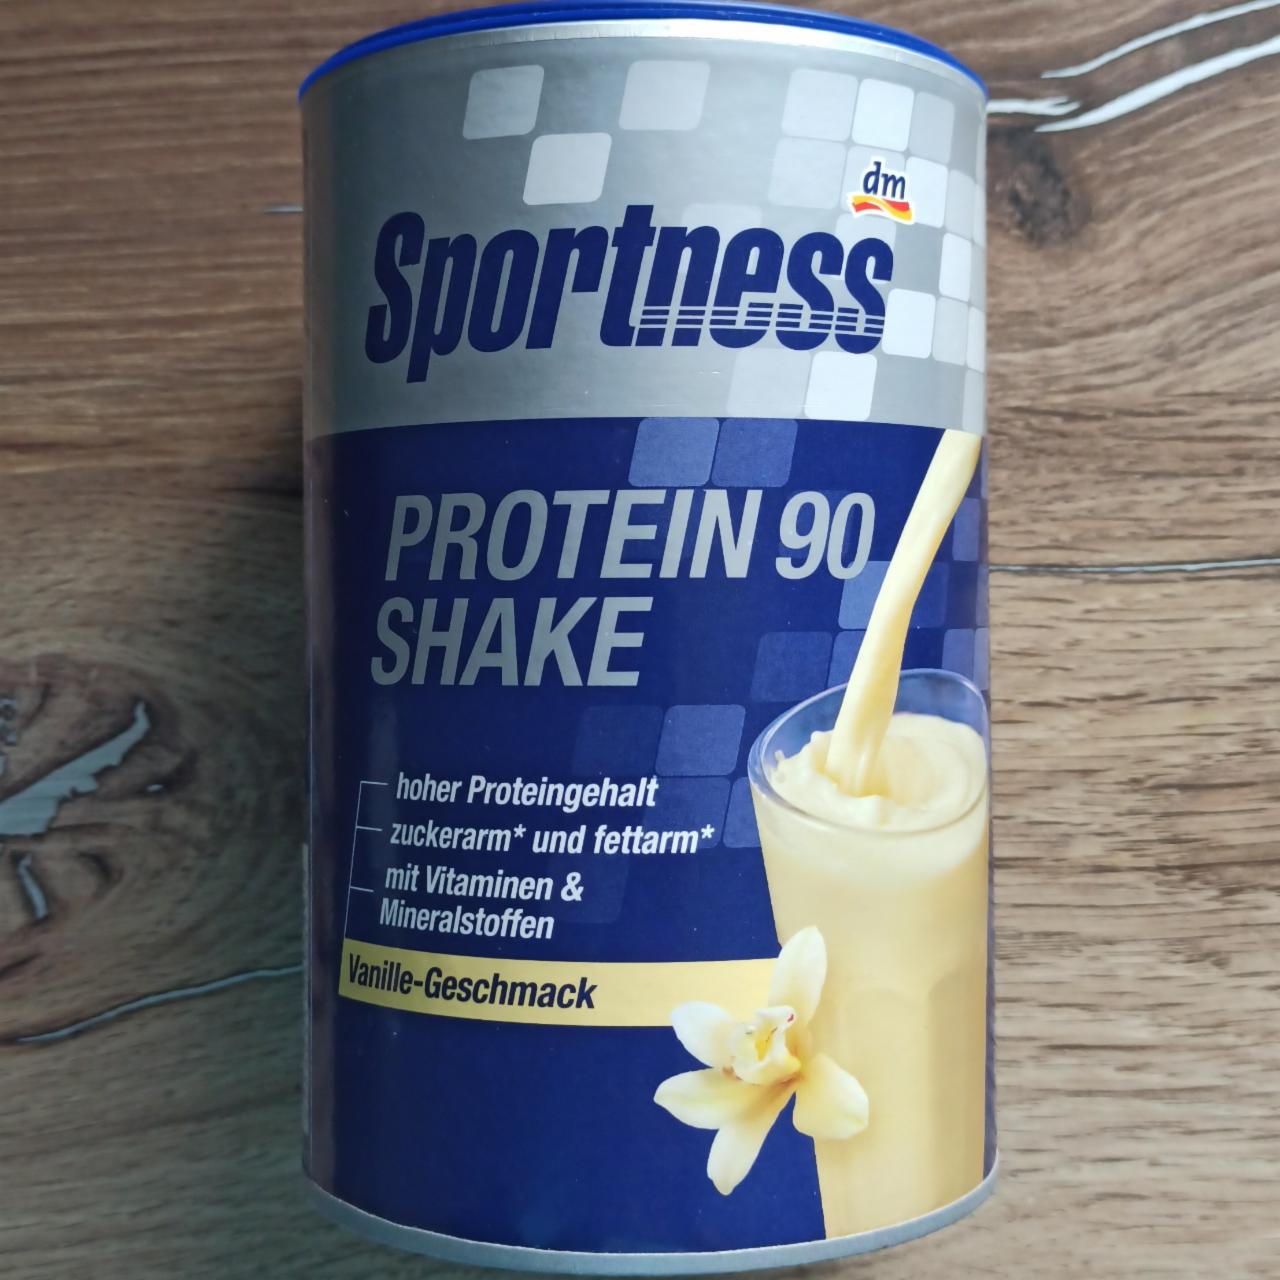 Фото - Protein 90 Shake Vanille Sportness